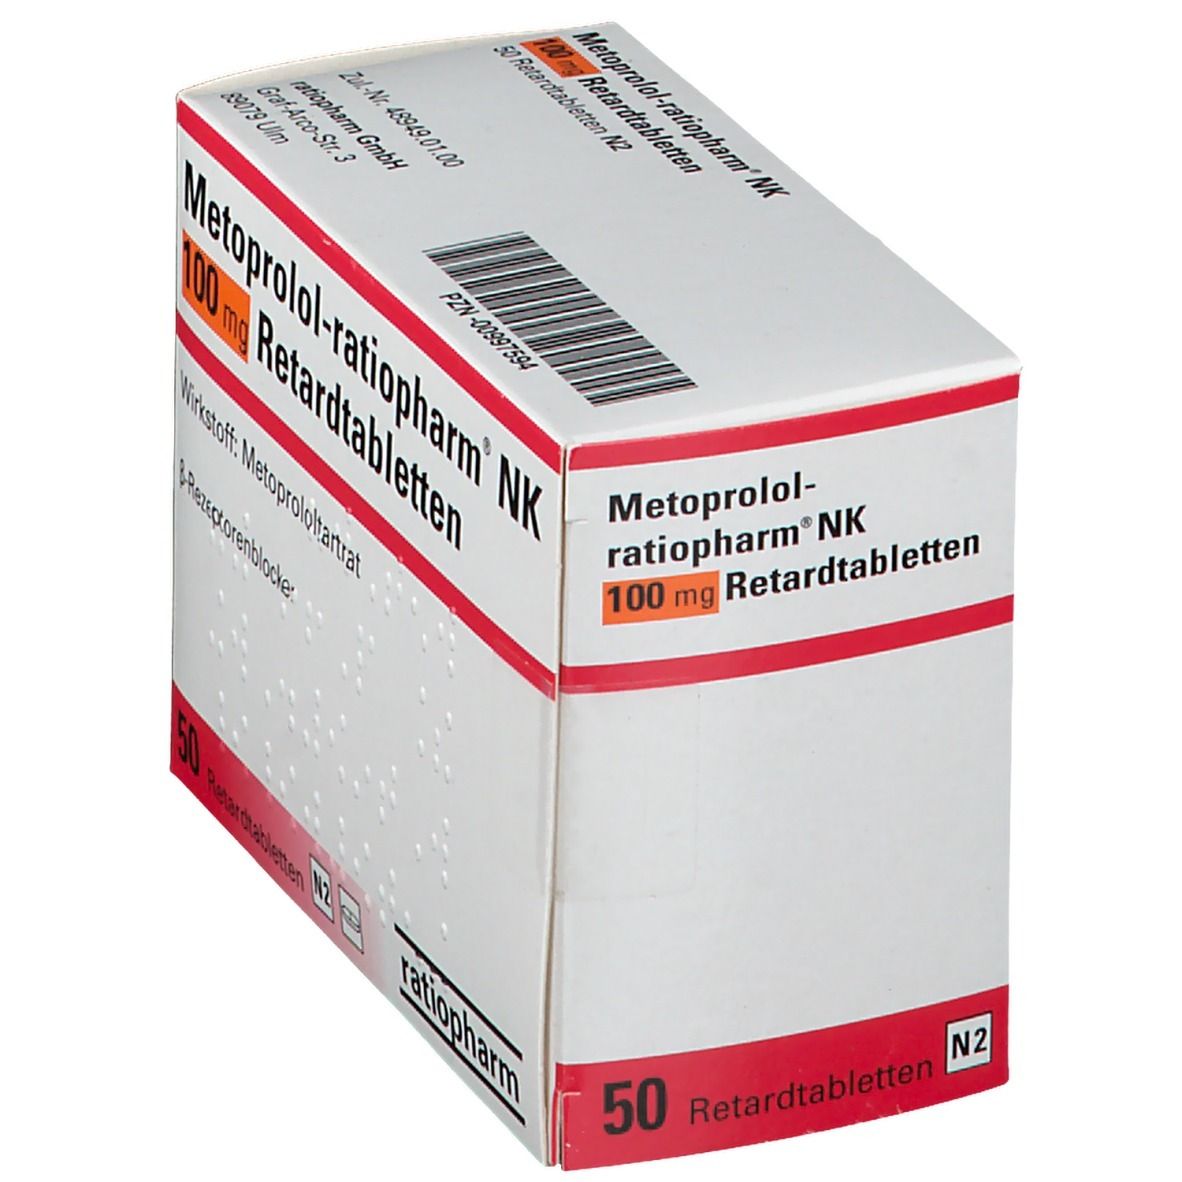 Metoprolol-ratiopharm® NK 100 mg